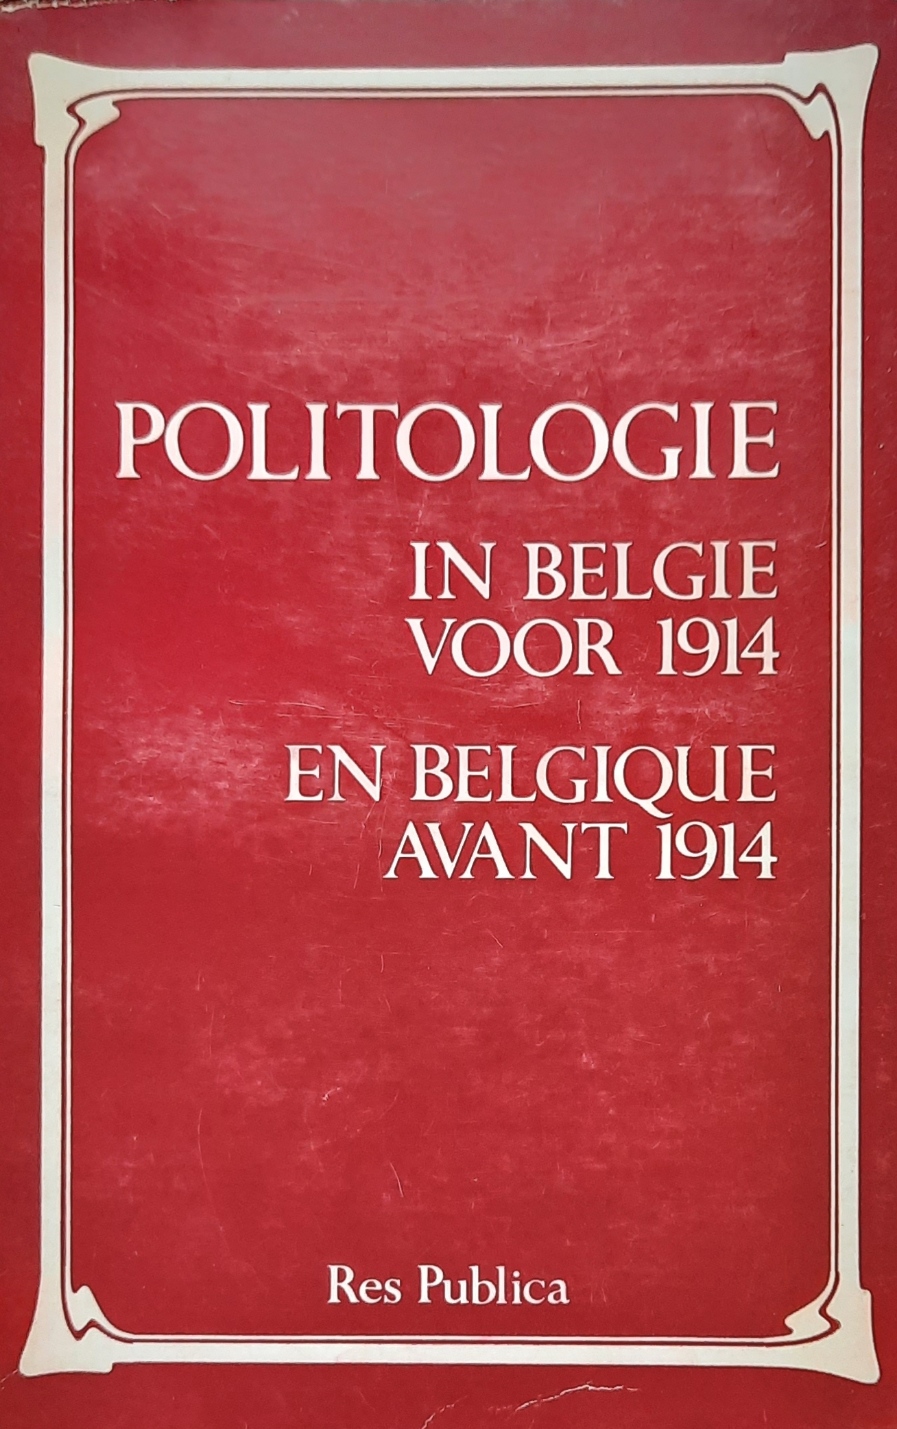 Book cover 19850131: WITTE E., GERARD E., FALTER R., REZSOHAZY R., GERIN P., WILS L., FRANçOIS L. | Politologie in België voor 1914 - Politologie en Belgique avant 1914 